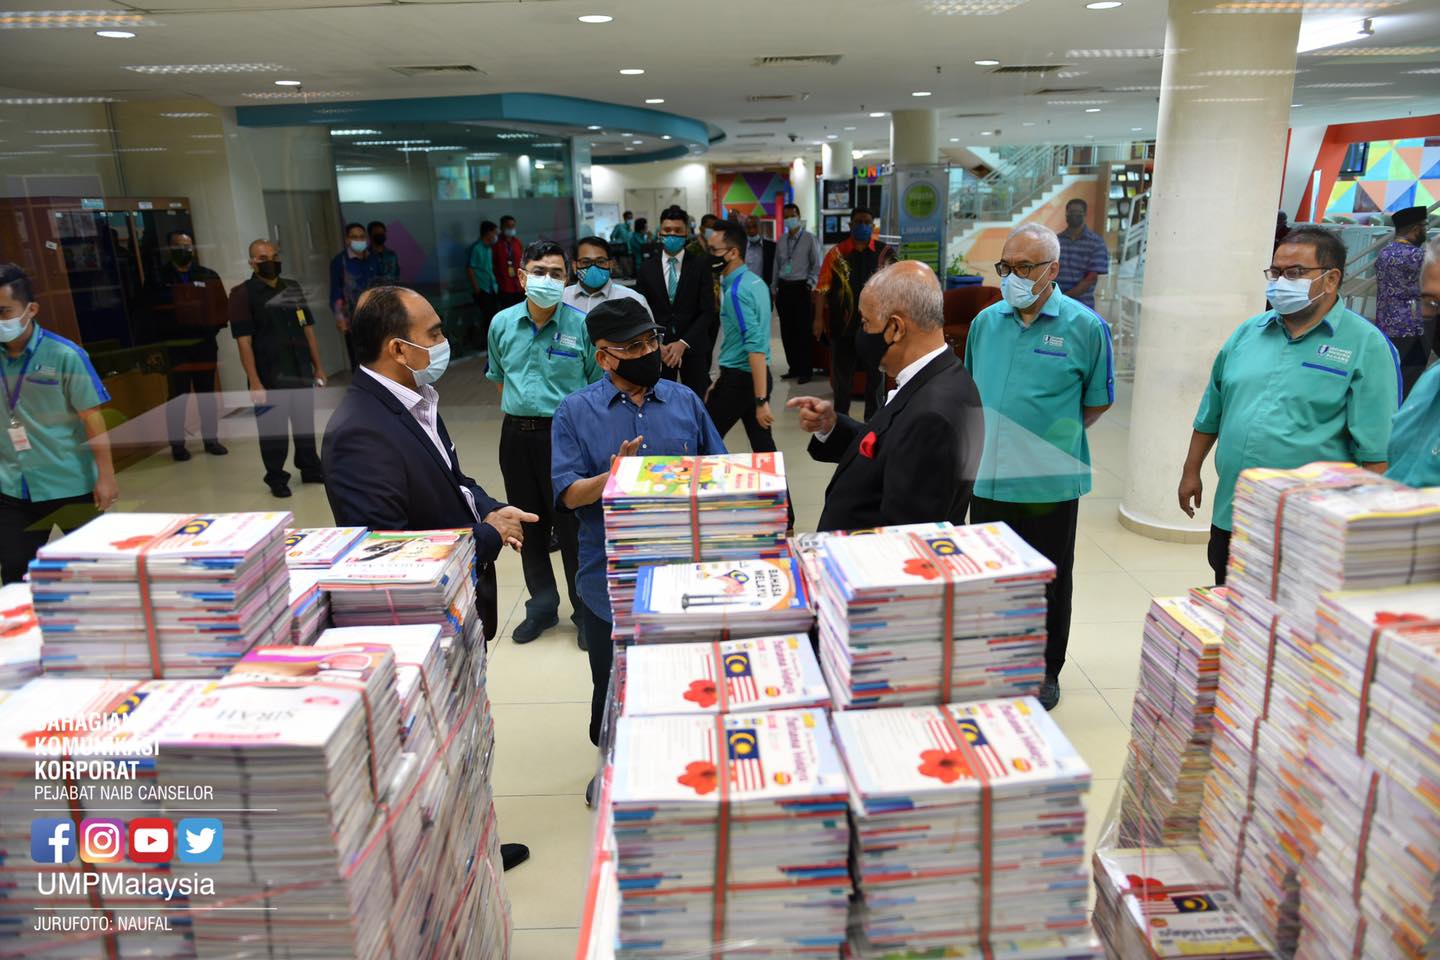 Yayasan UMP receives 32,000 copies of books worth RM200,000